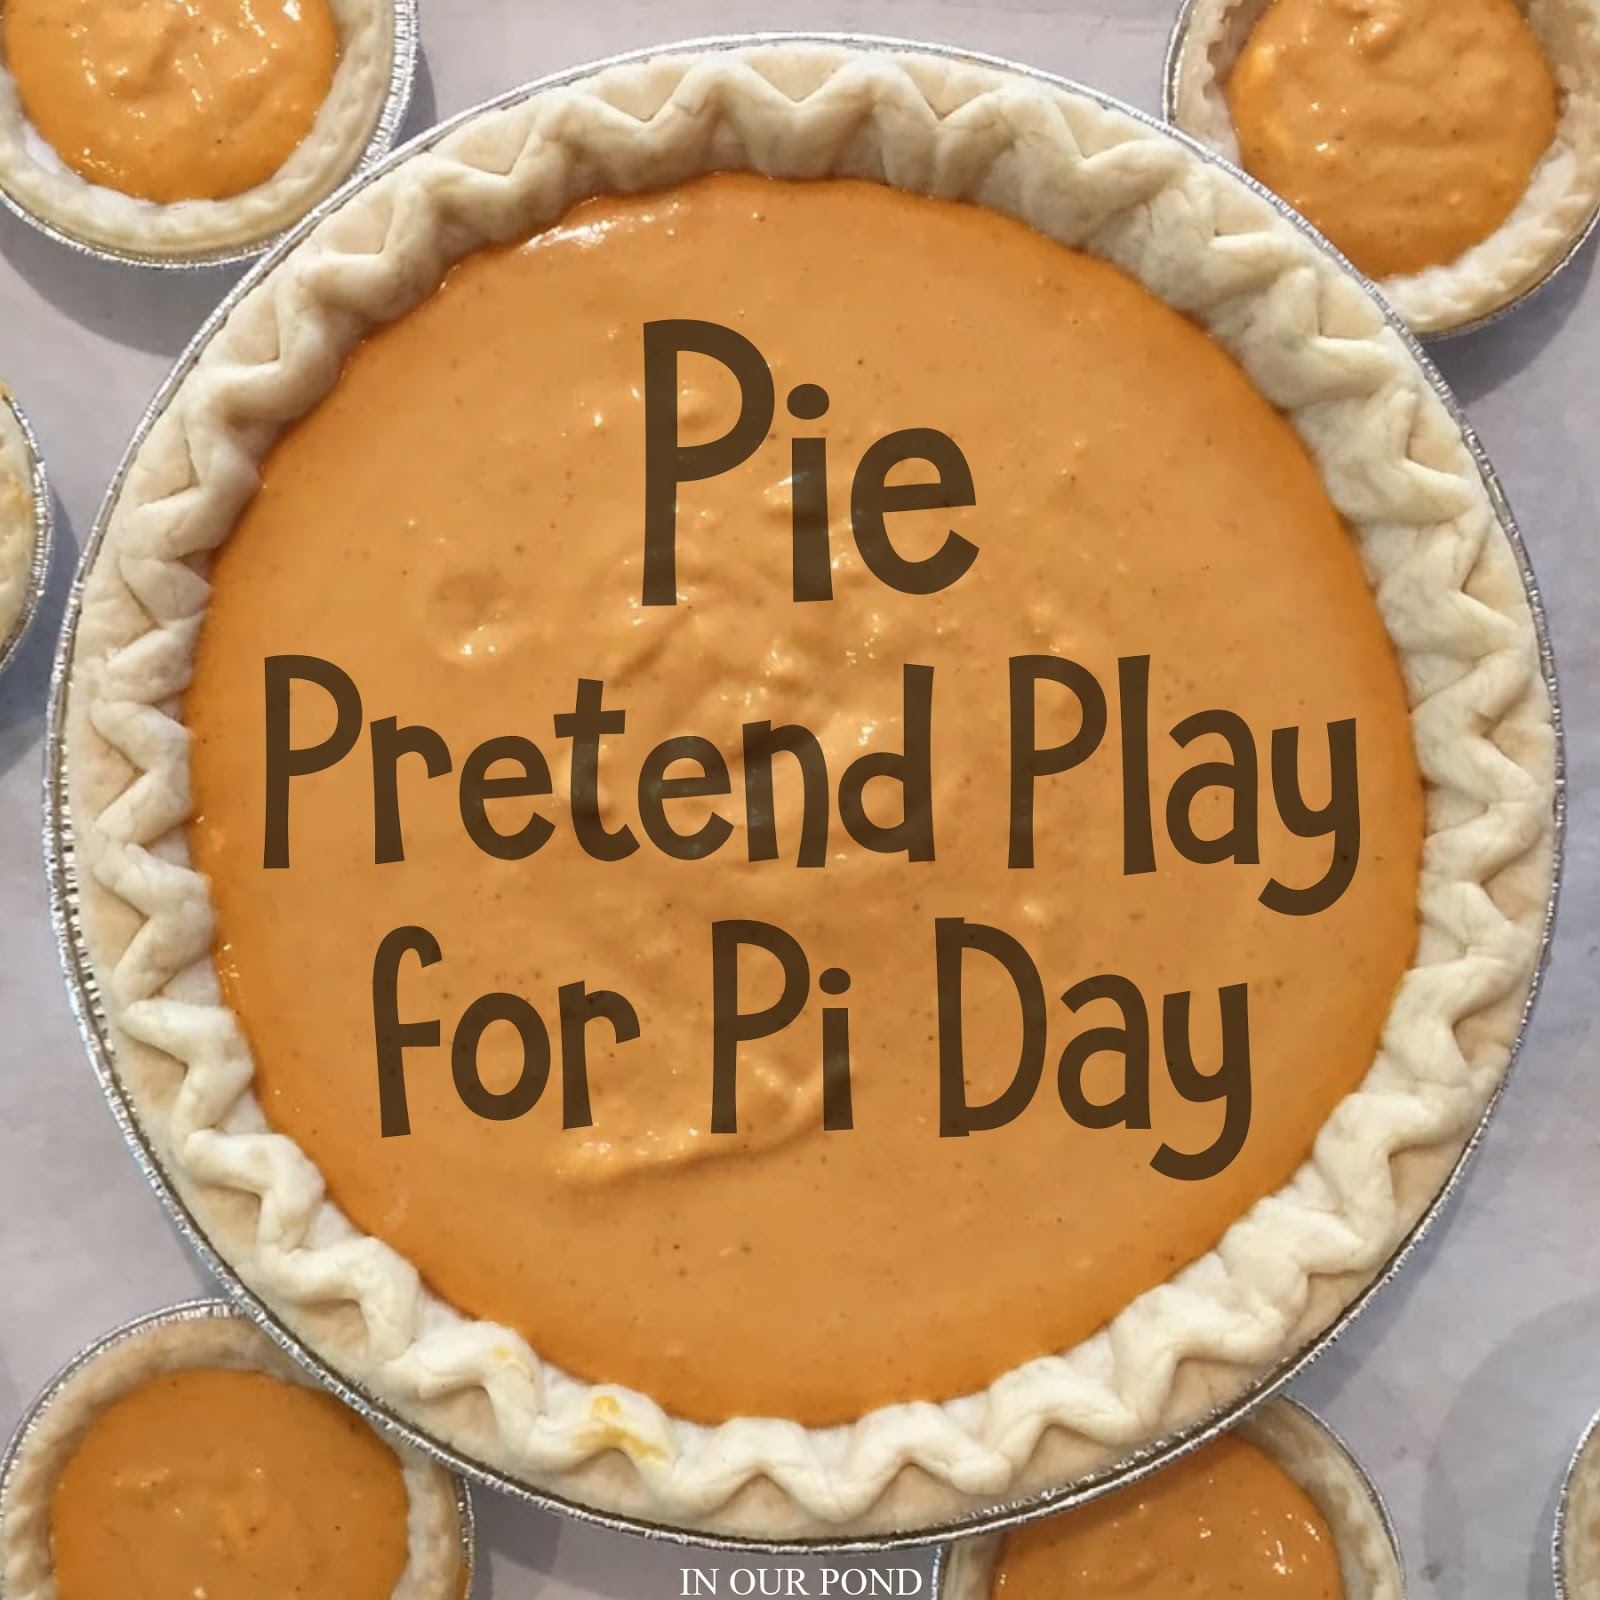 Pie Pretend Play Ideas for Pi Day